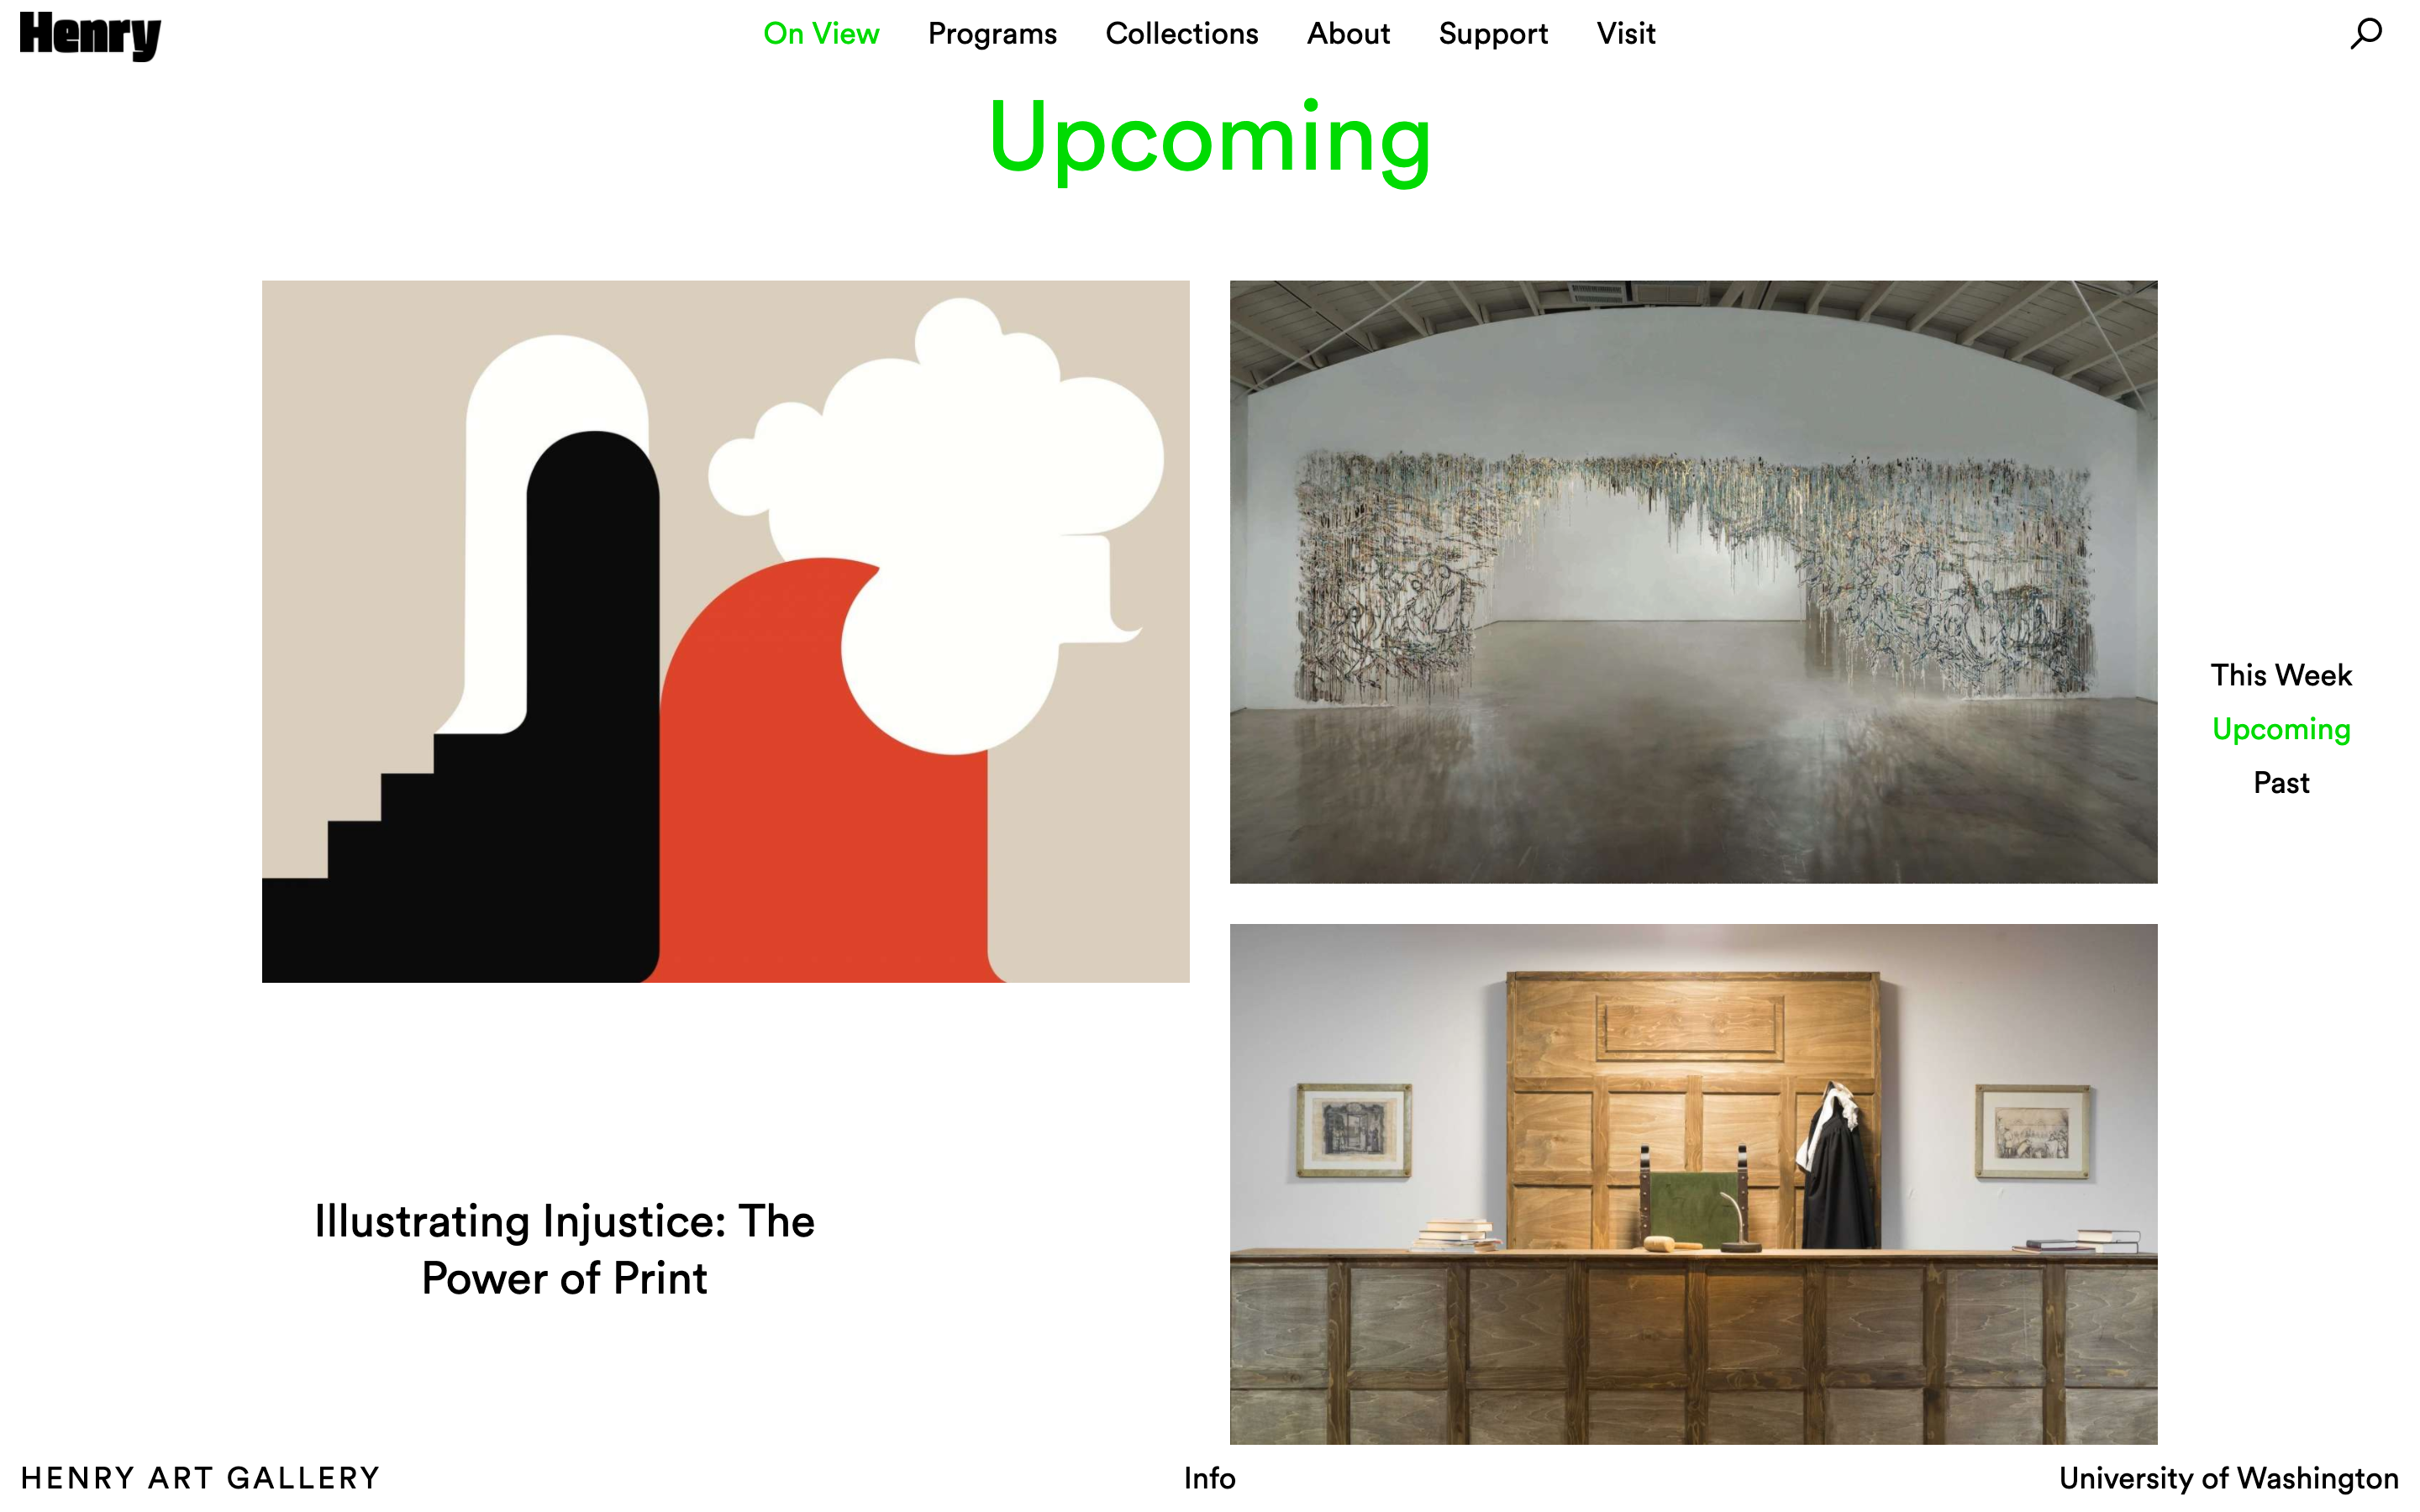 The Henry Art Gallery Website: Upcoming Work